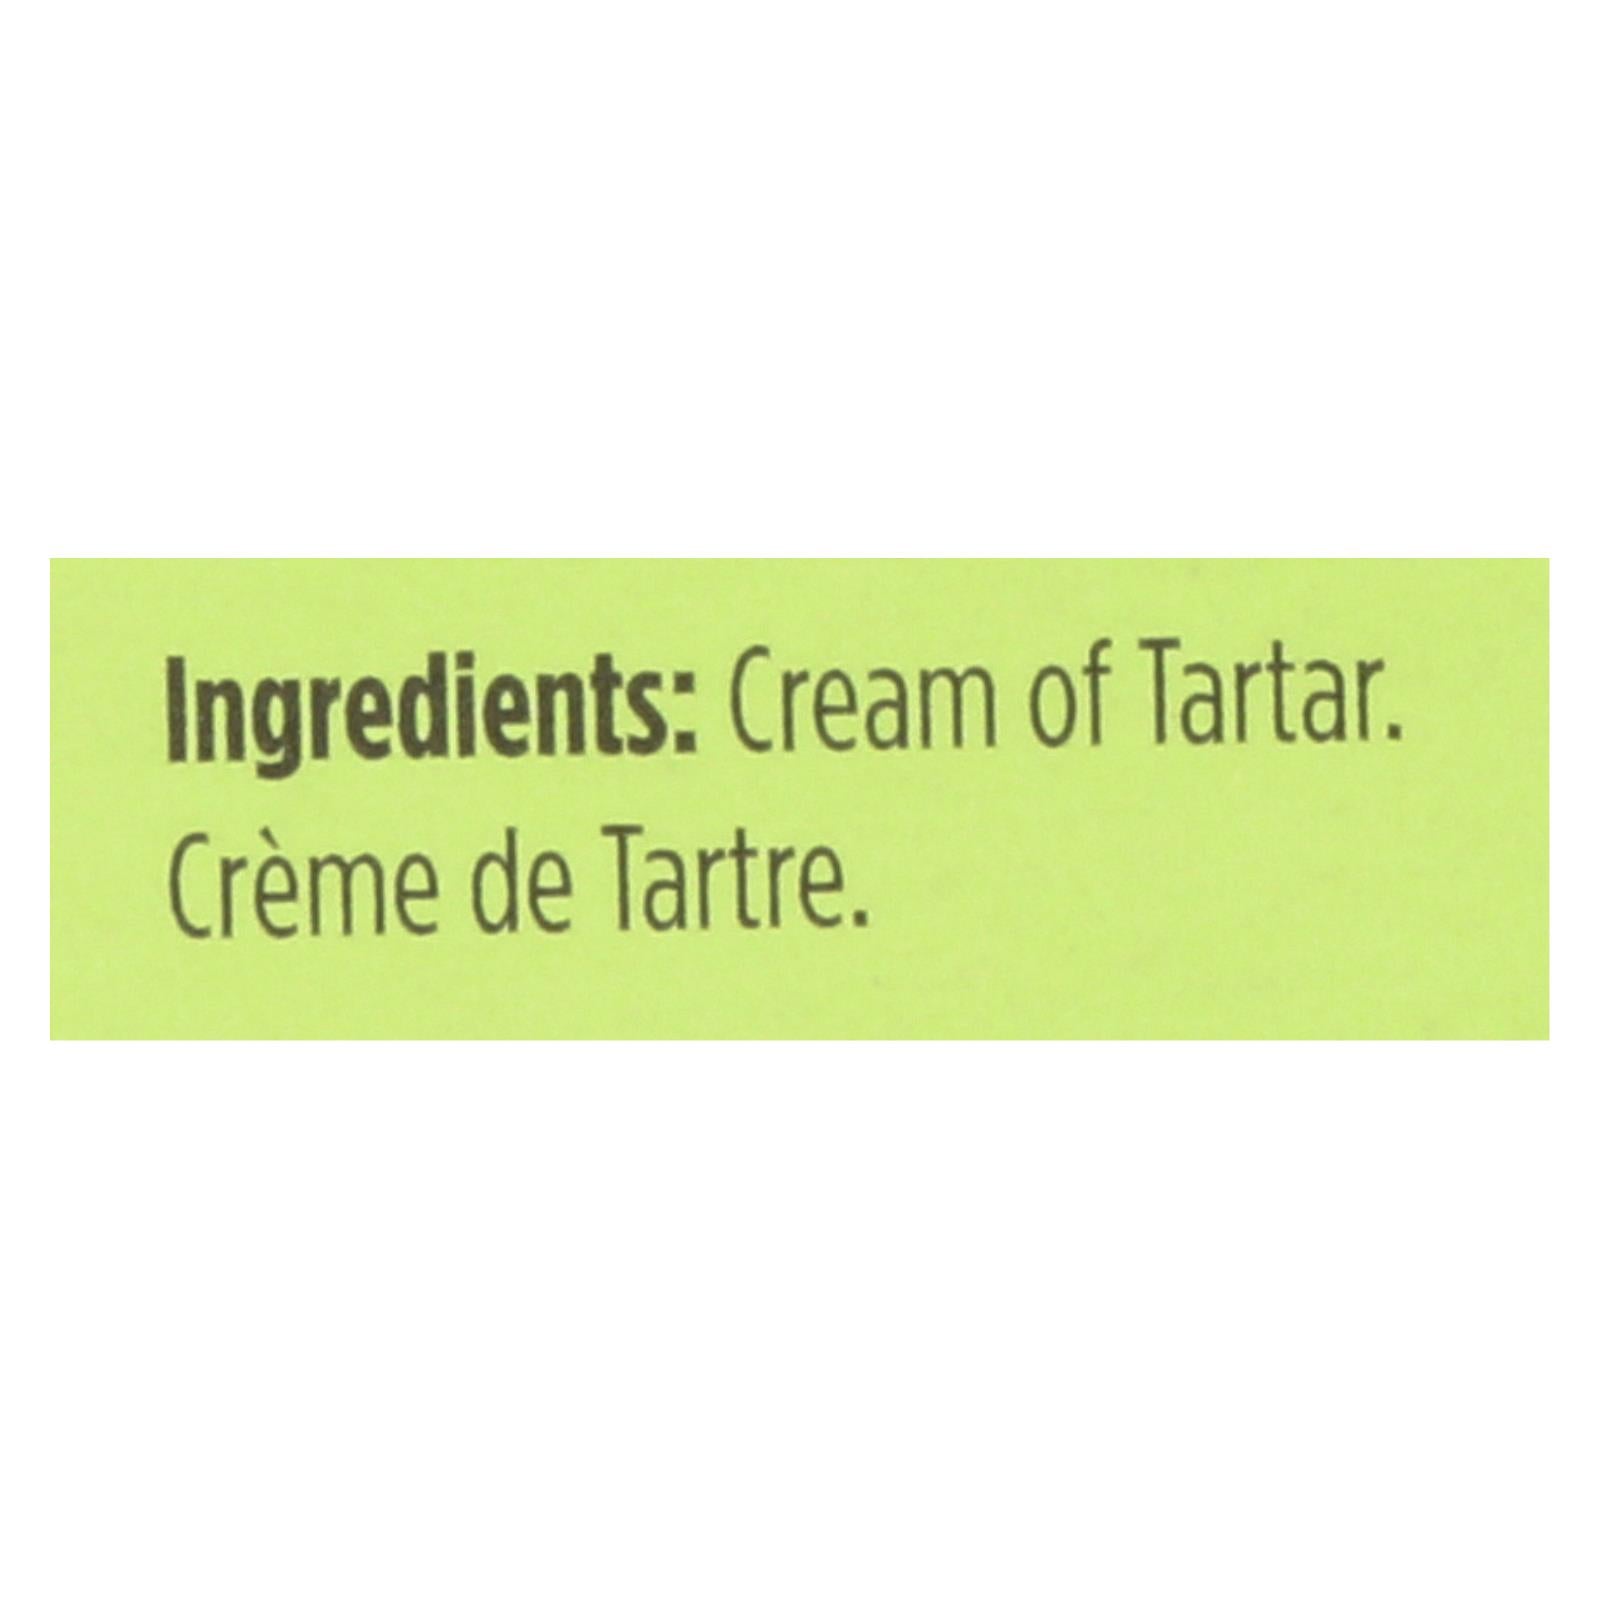 Spicely Organics - Cream of Tartar - Case of 6 - 0.5 oz.